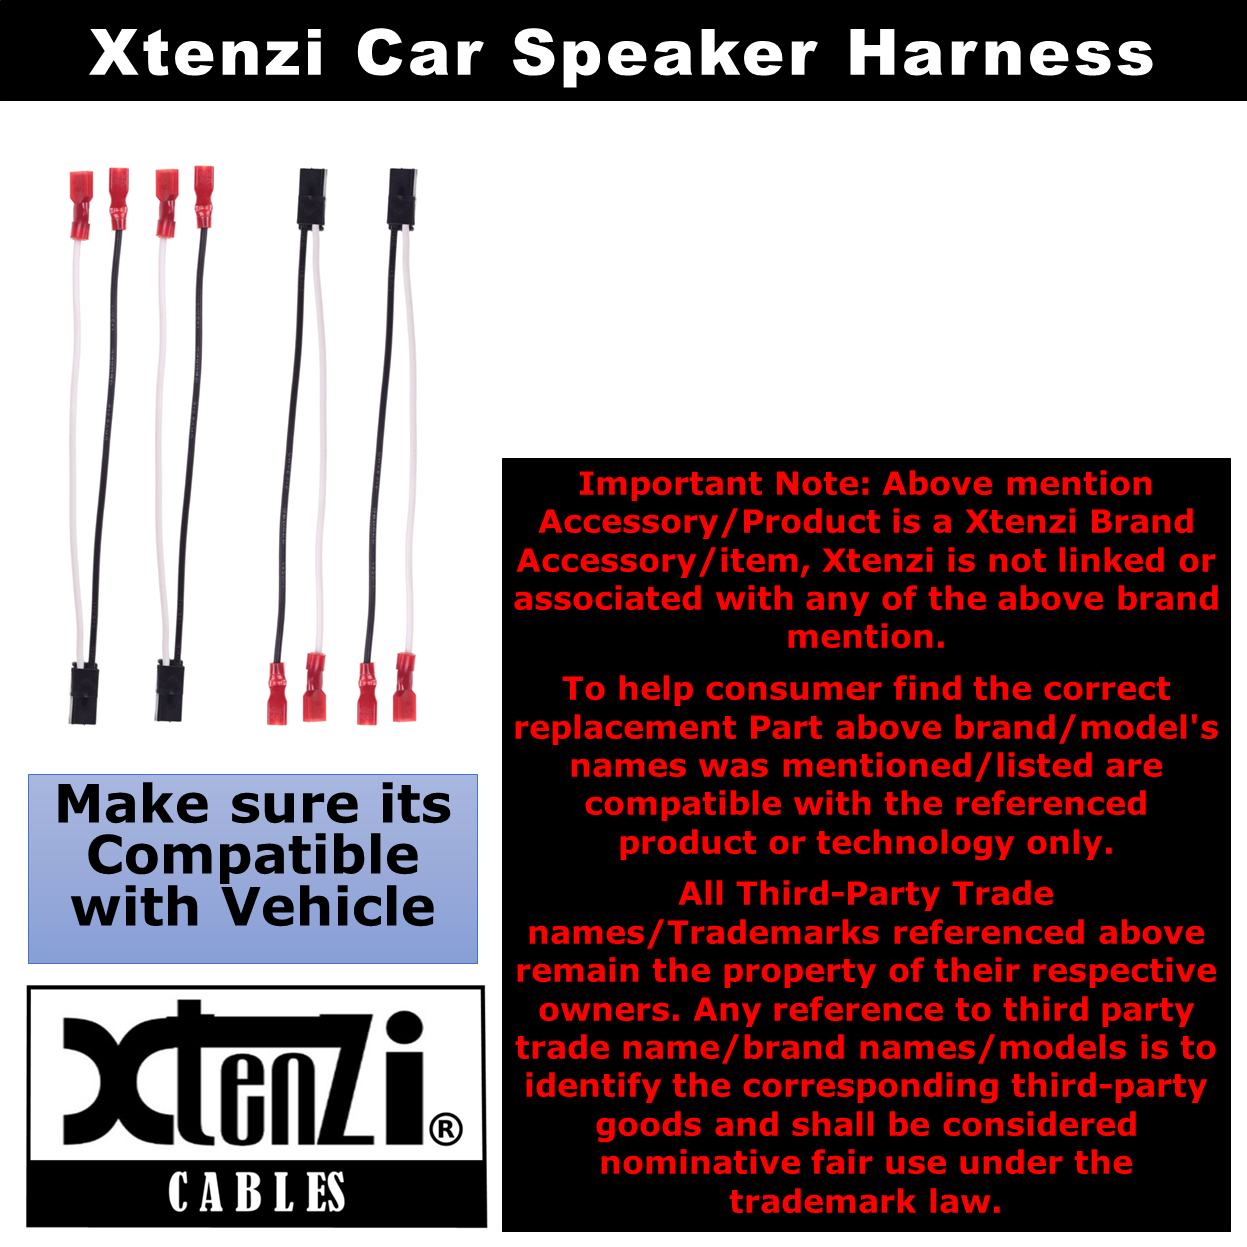 Xtenzi 2 Pair Car Audio Speaker Harness Set for Select Jimmy, Astro Vehicles